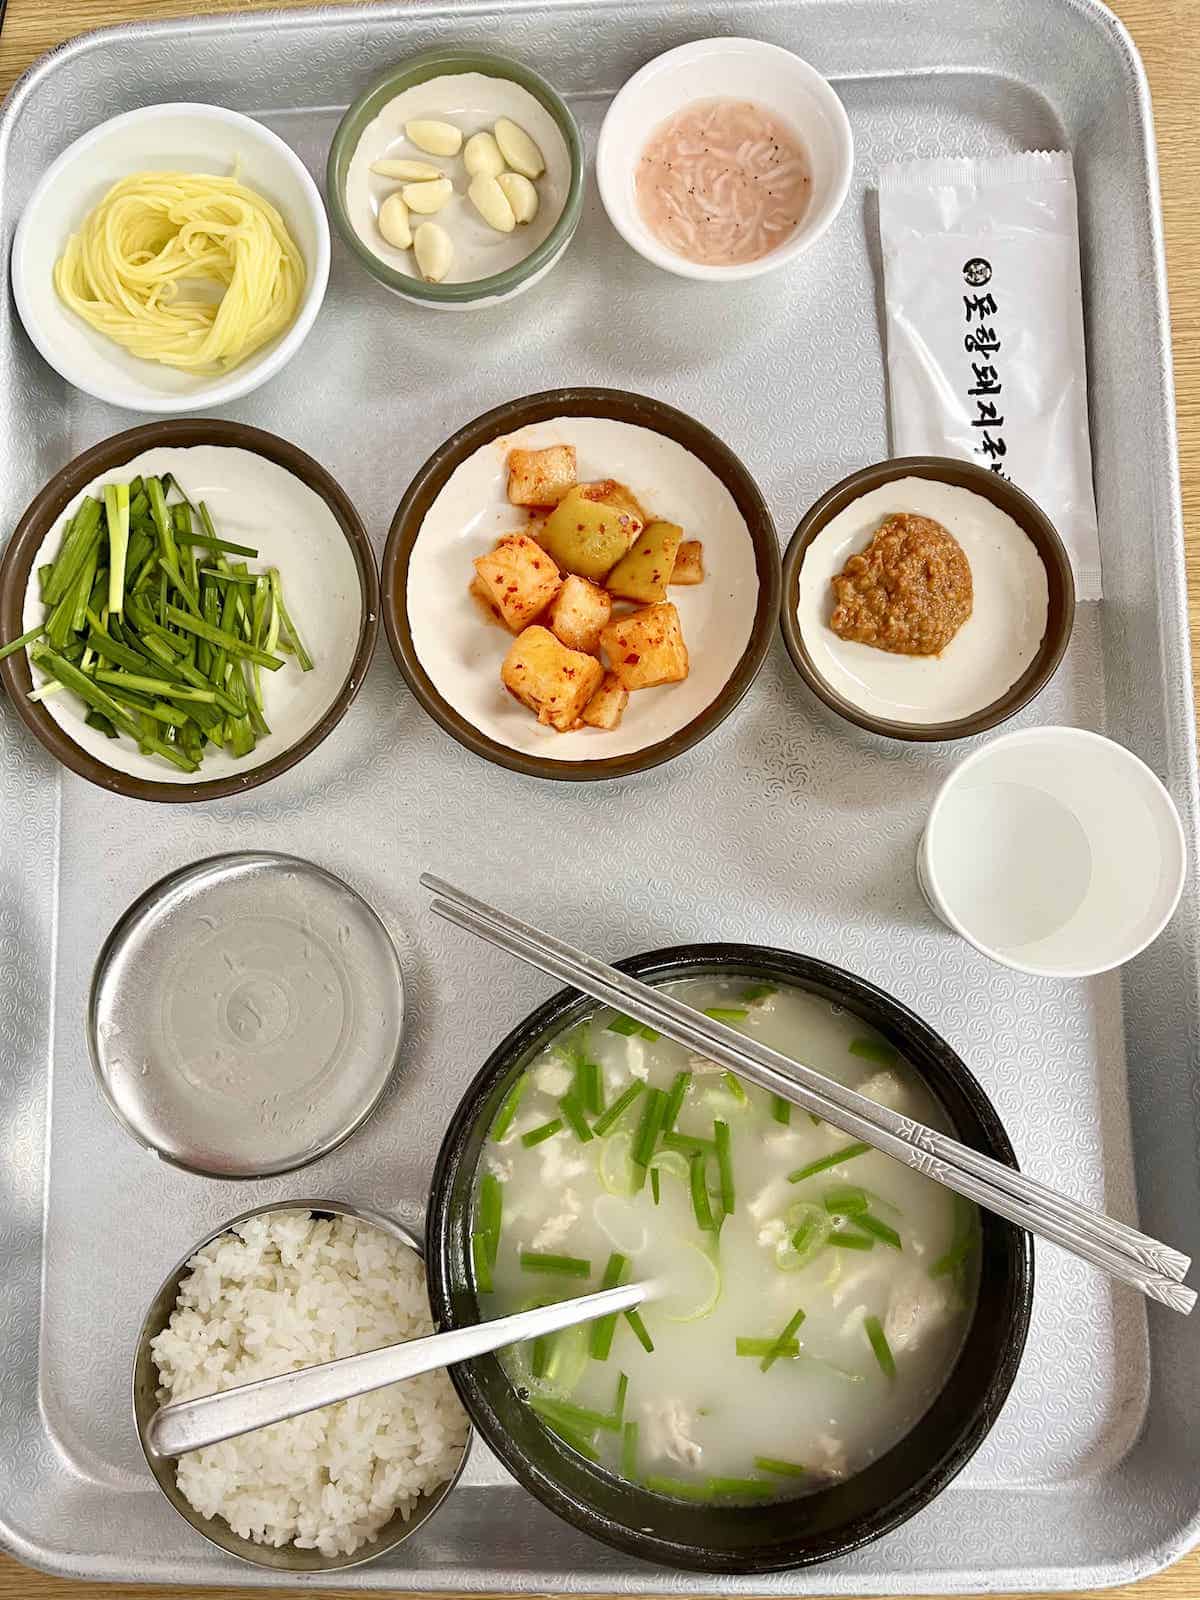 Korean radish kimchi, chives, noodles as part of a Gukbap (Pork and rice) set meal.